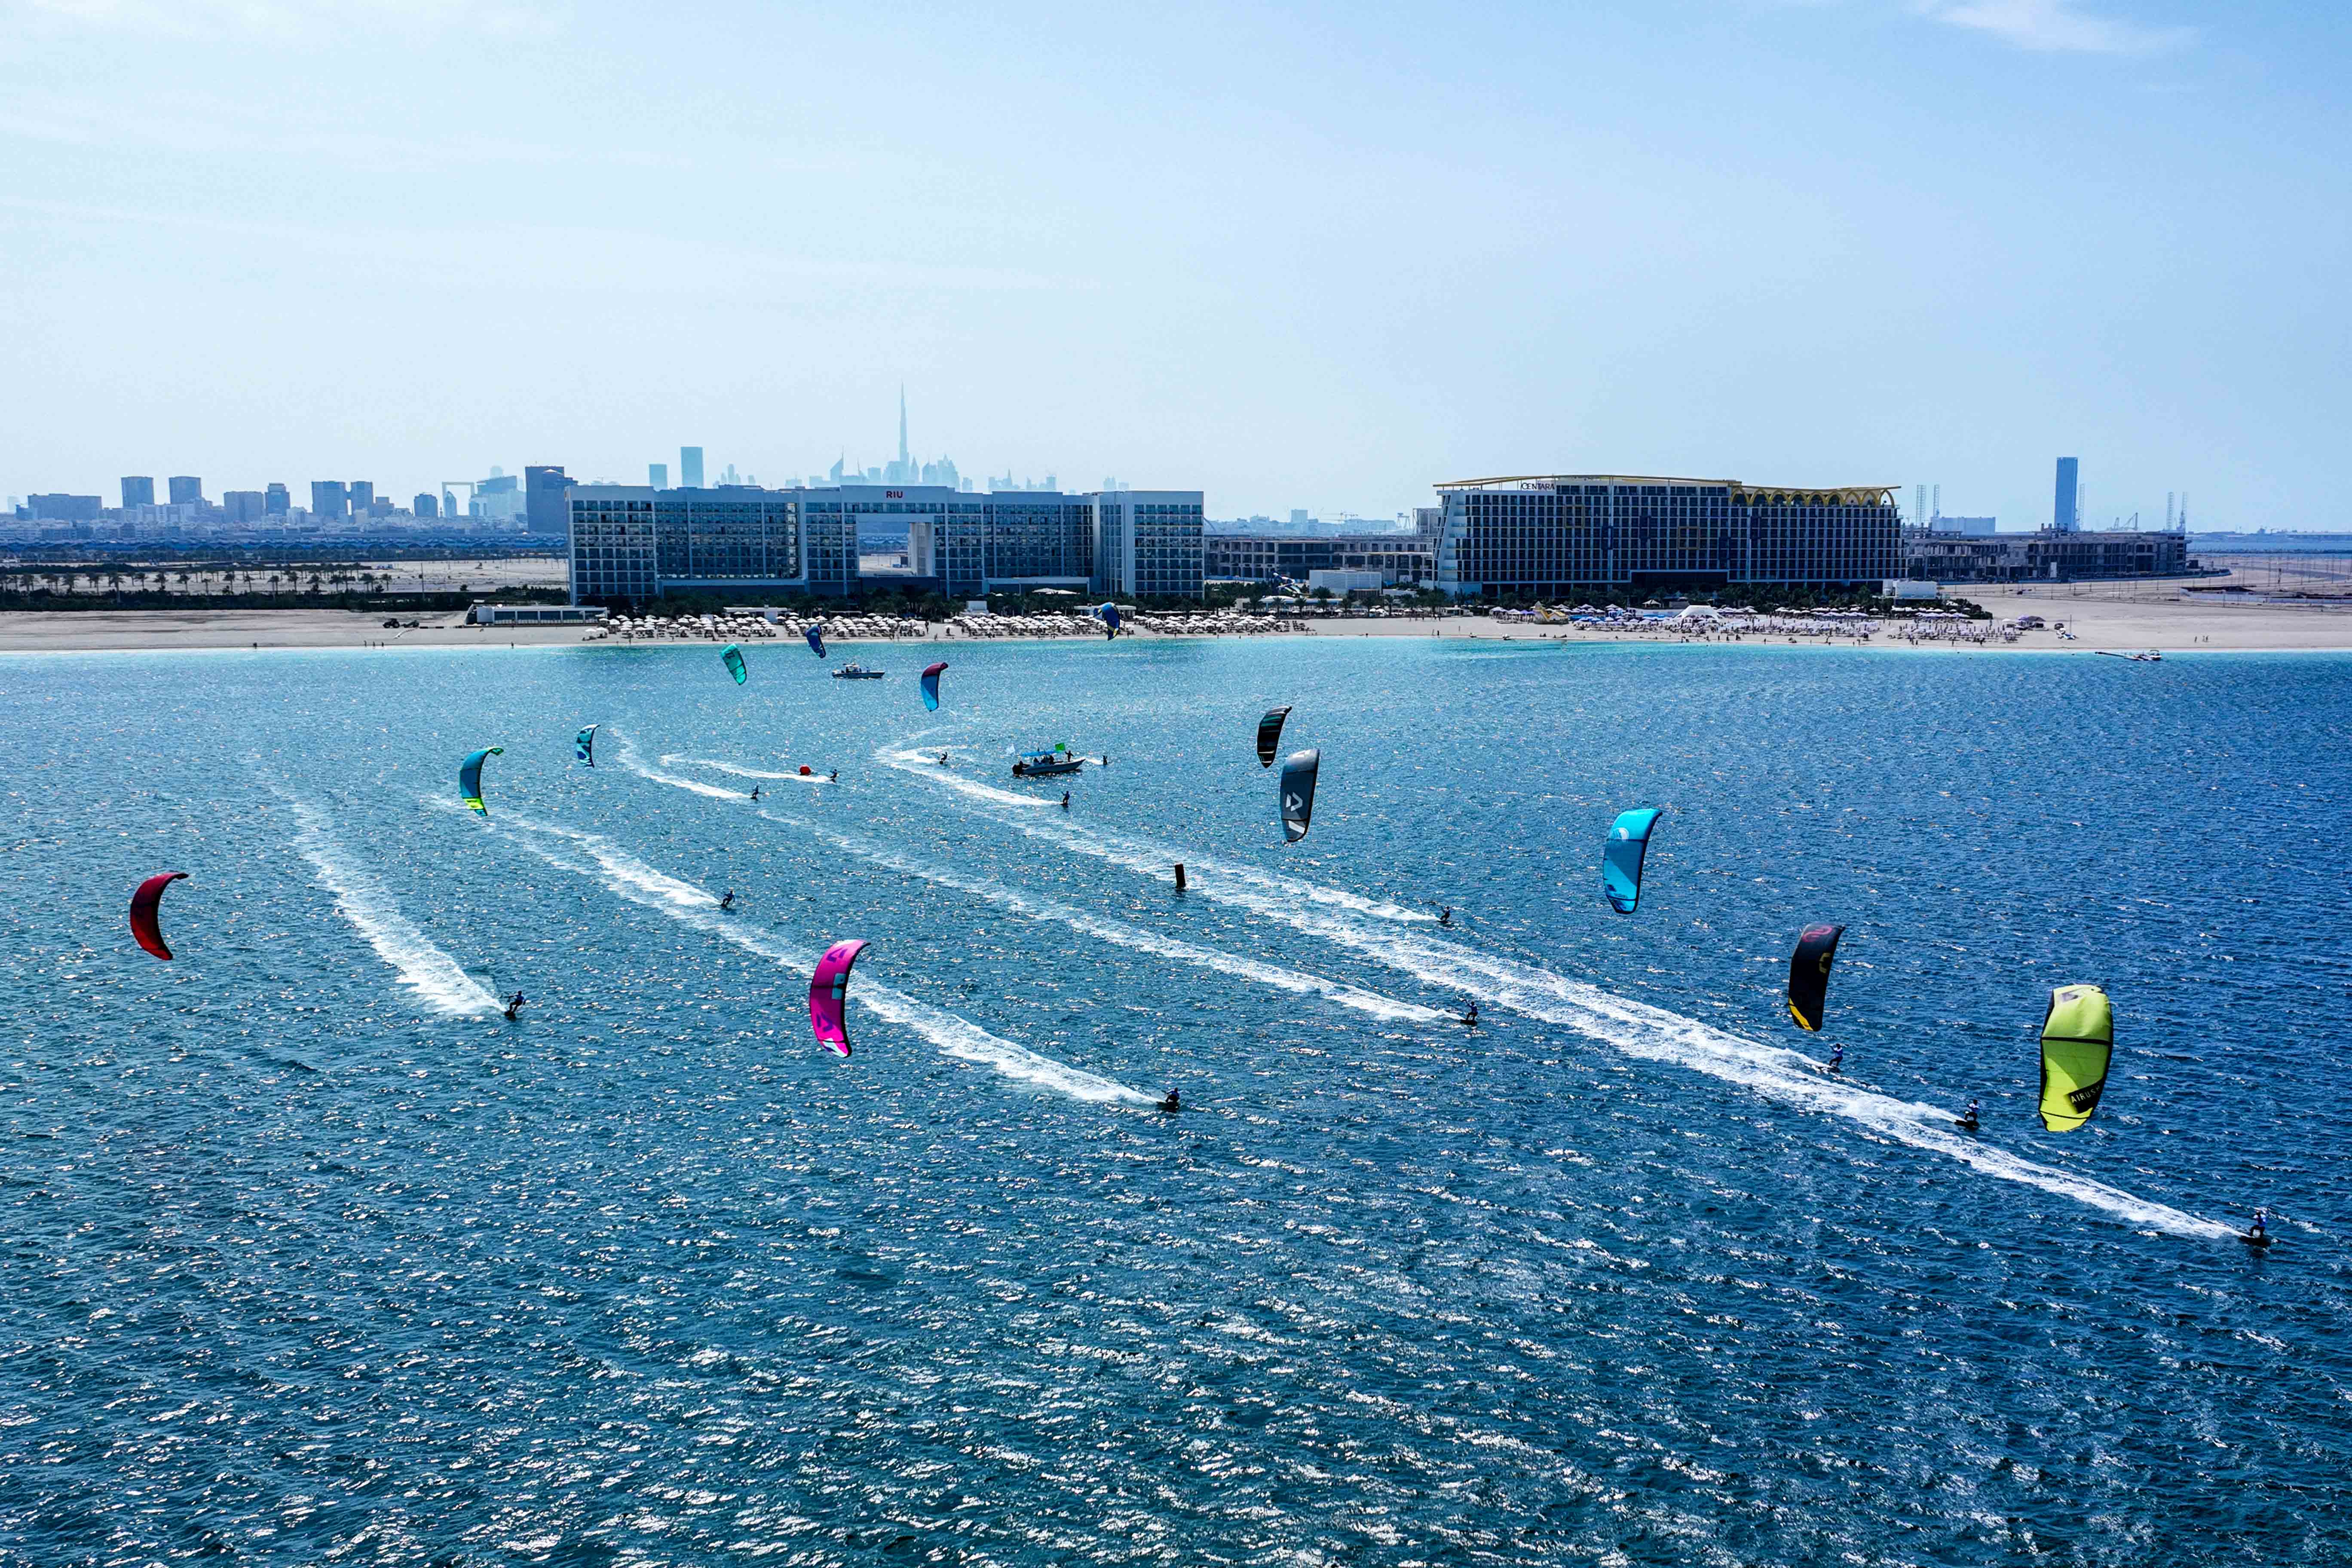 Dubai Watersports Day returns to Dubai Island this Saturday and Sunday